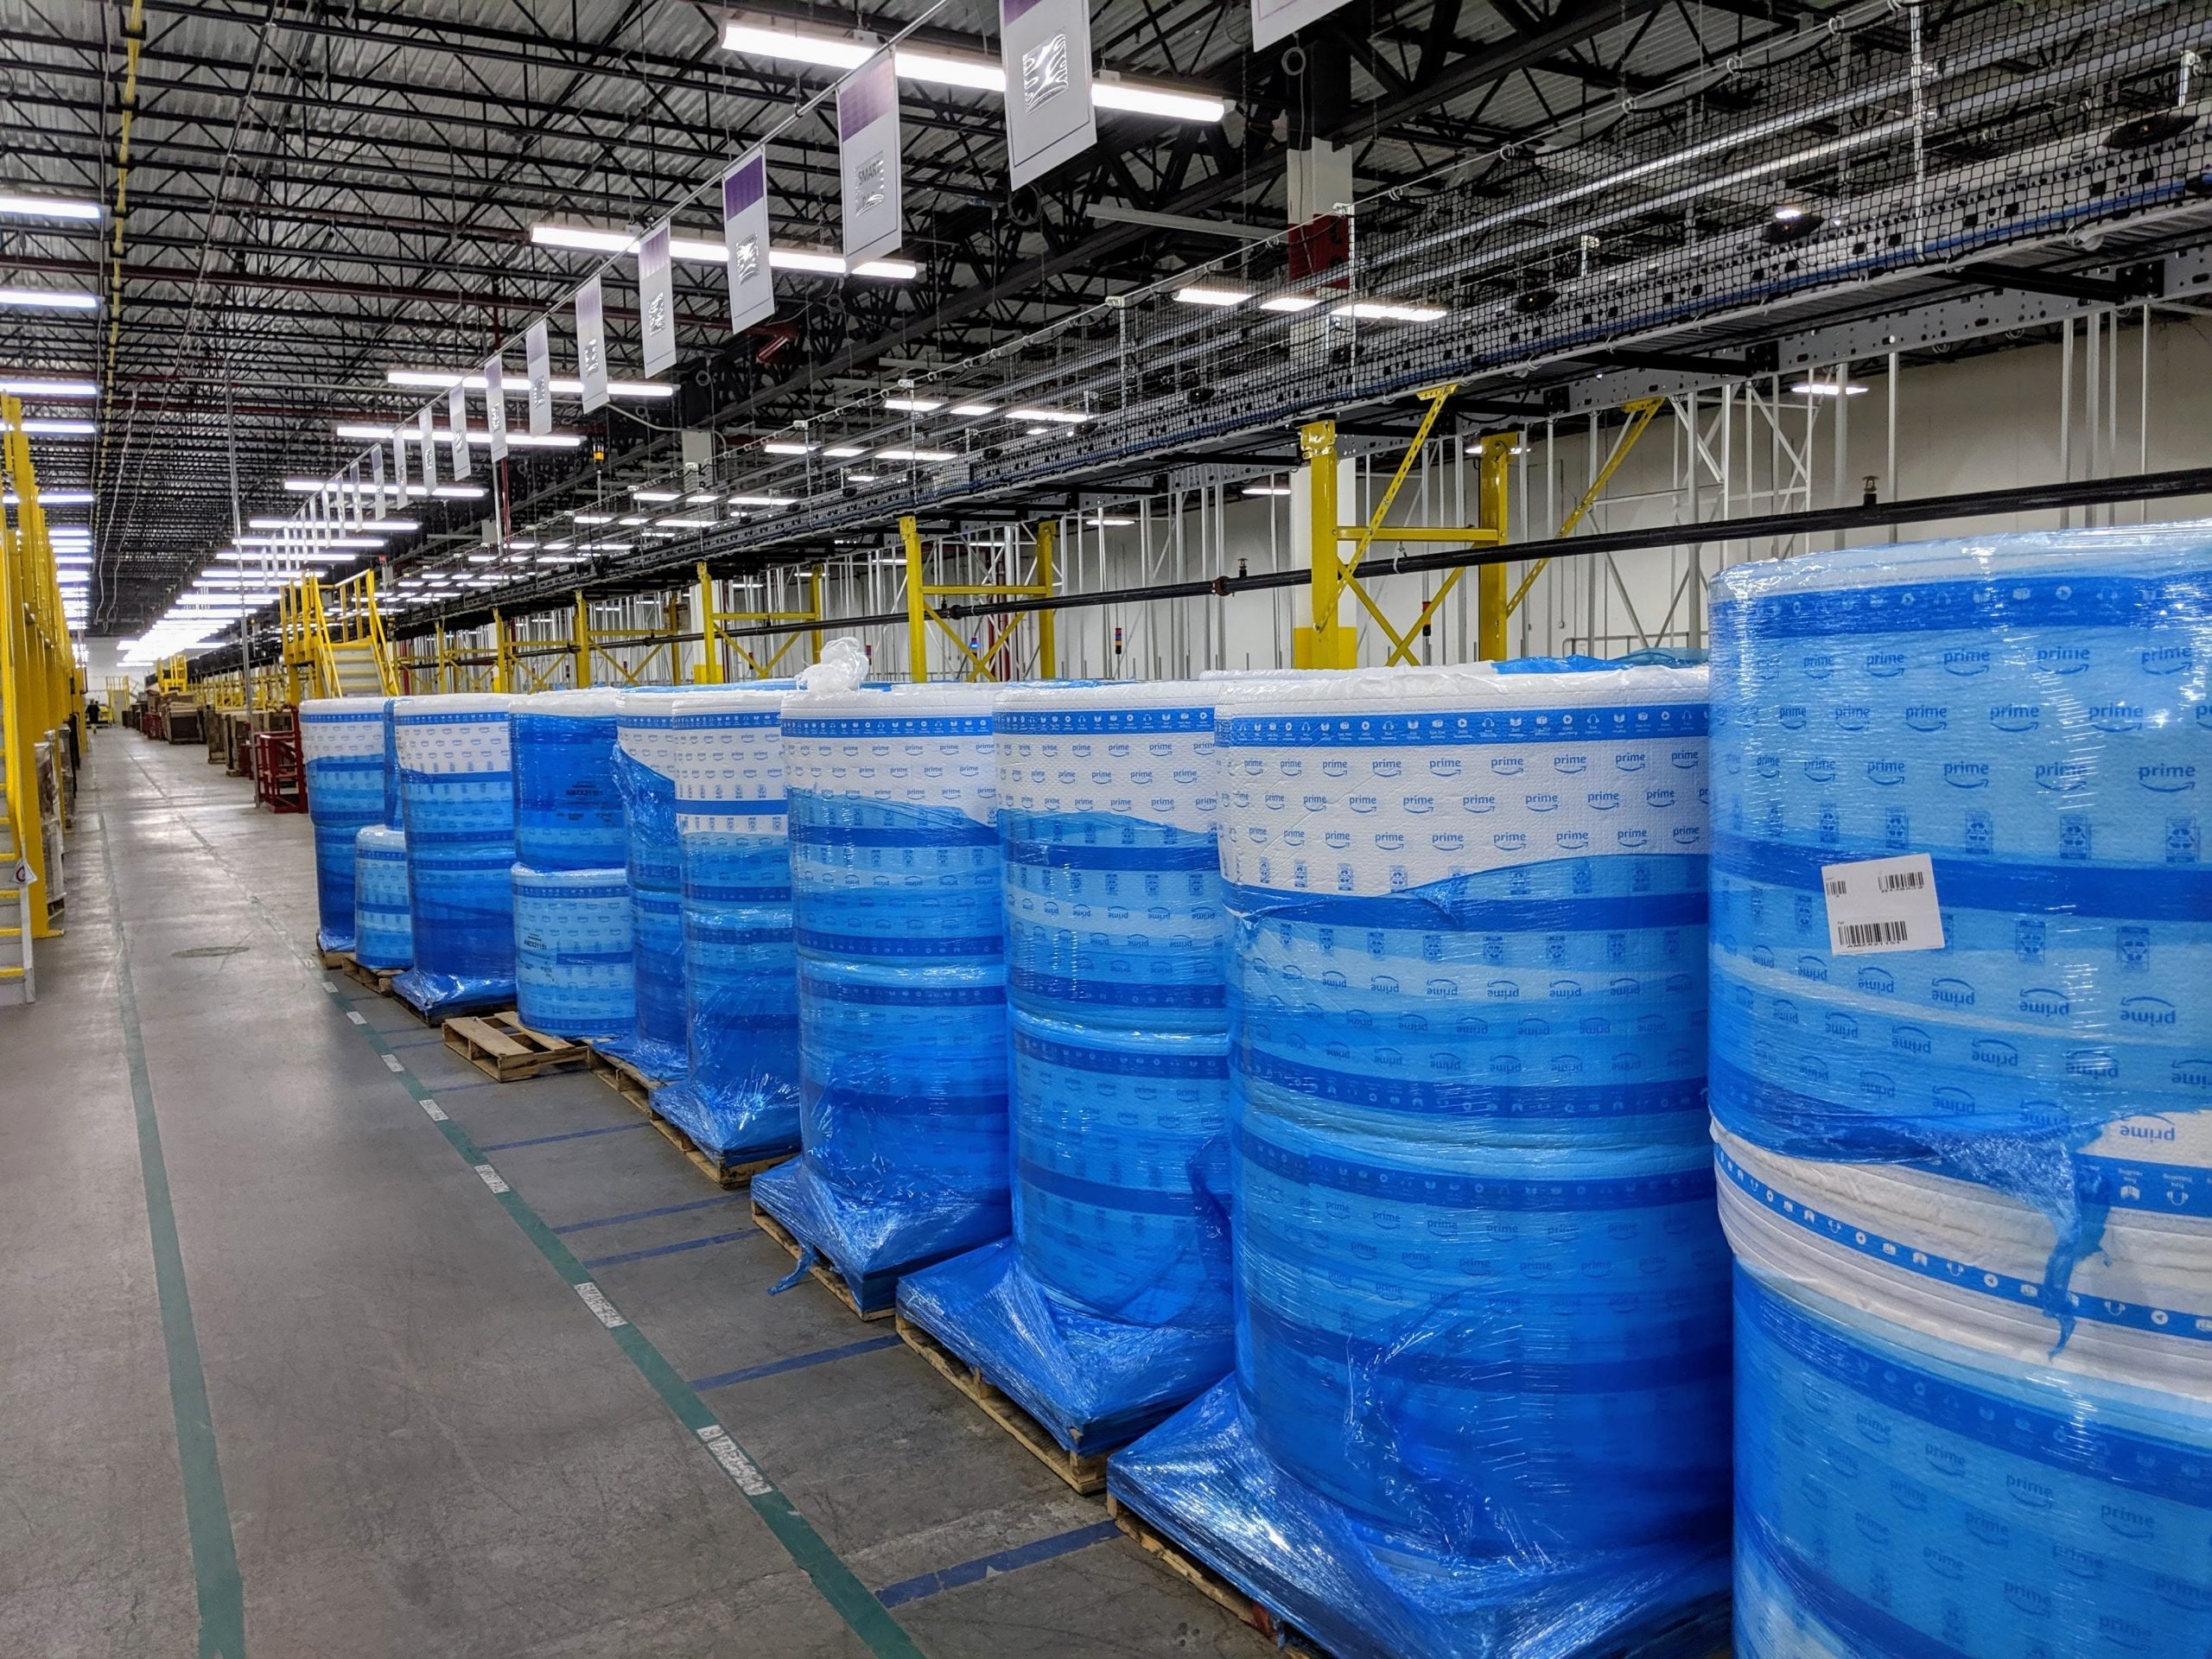 Amazon plastic packaging in massive bundles at the Staten Island, New York Amazon fulfillment center.